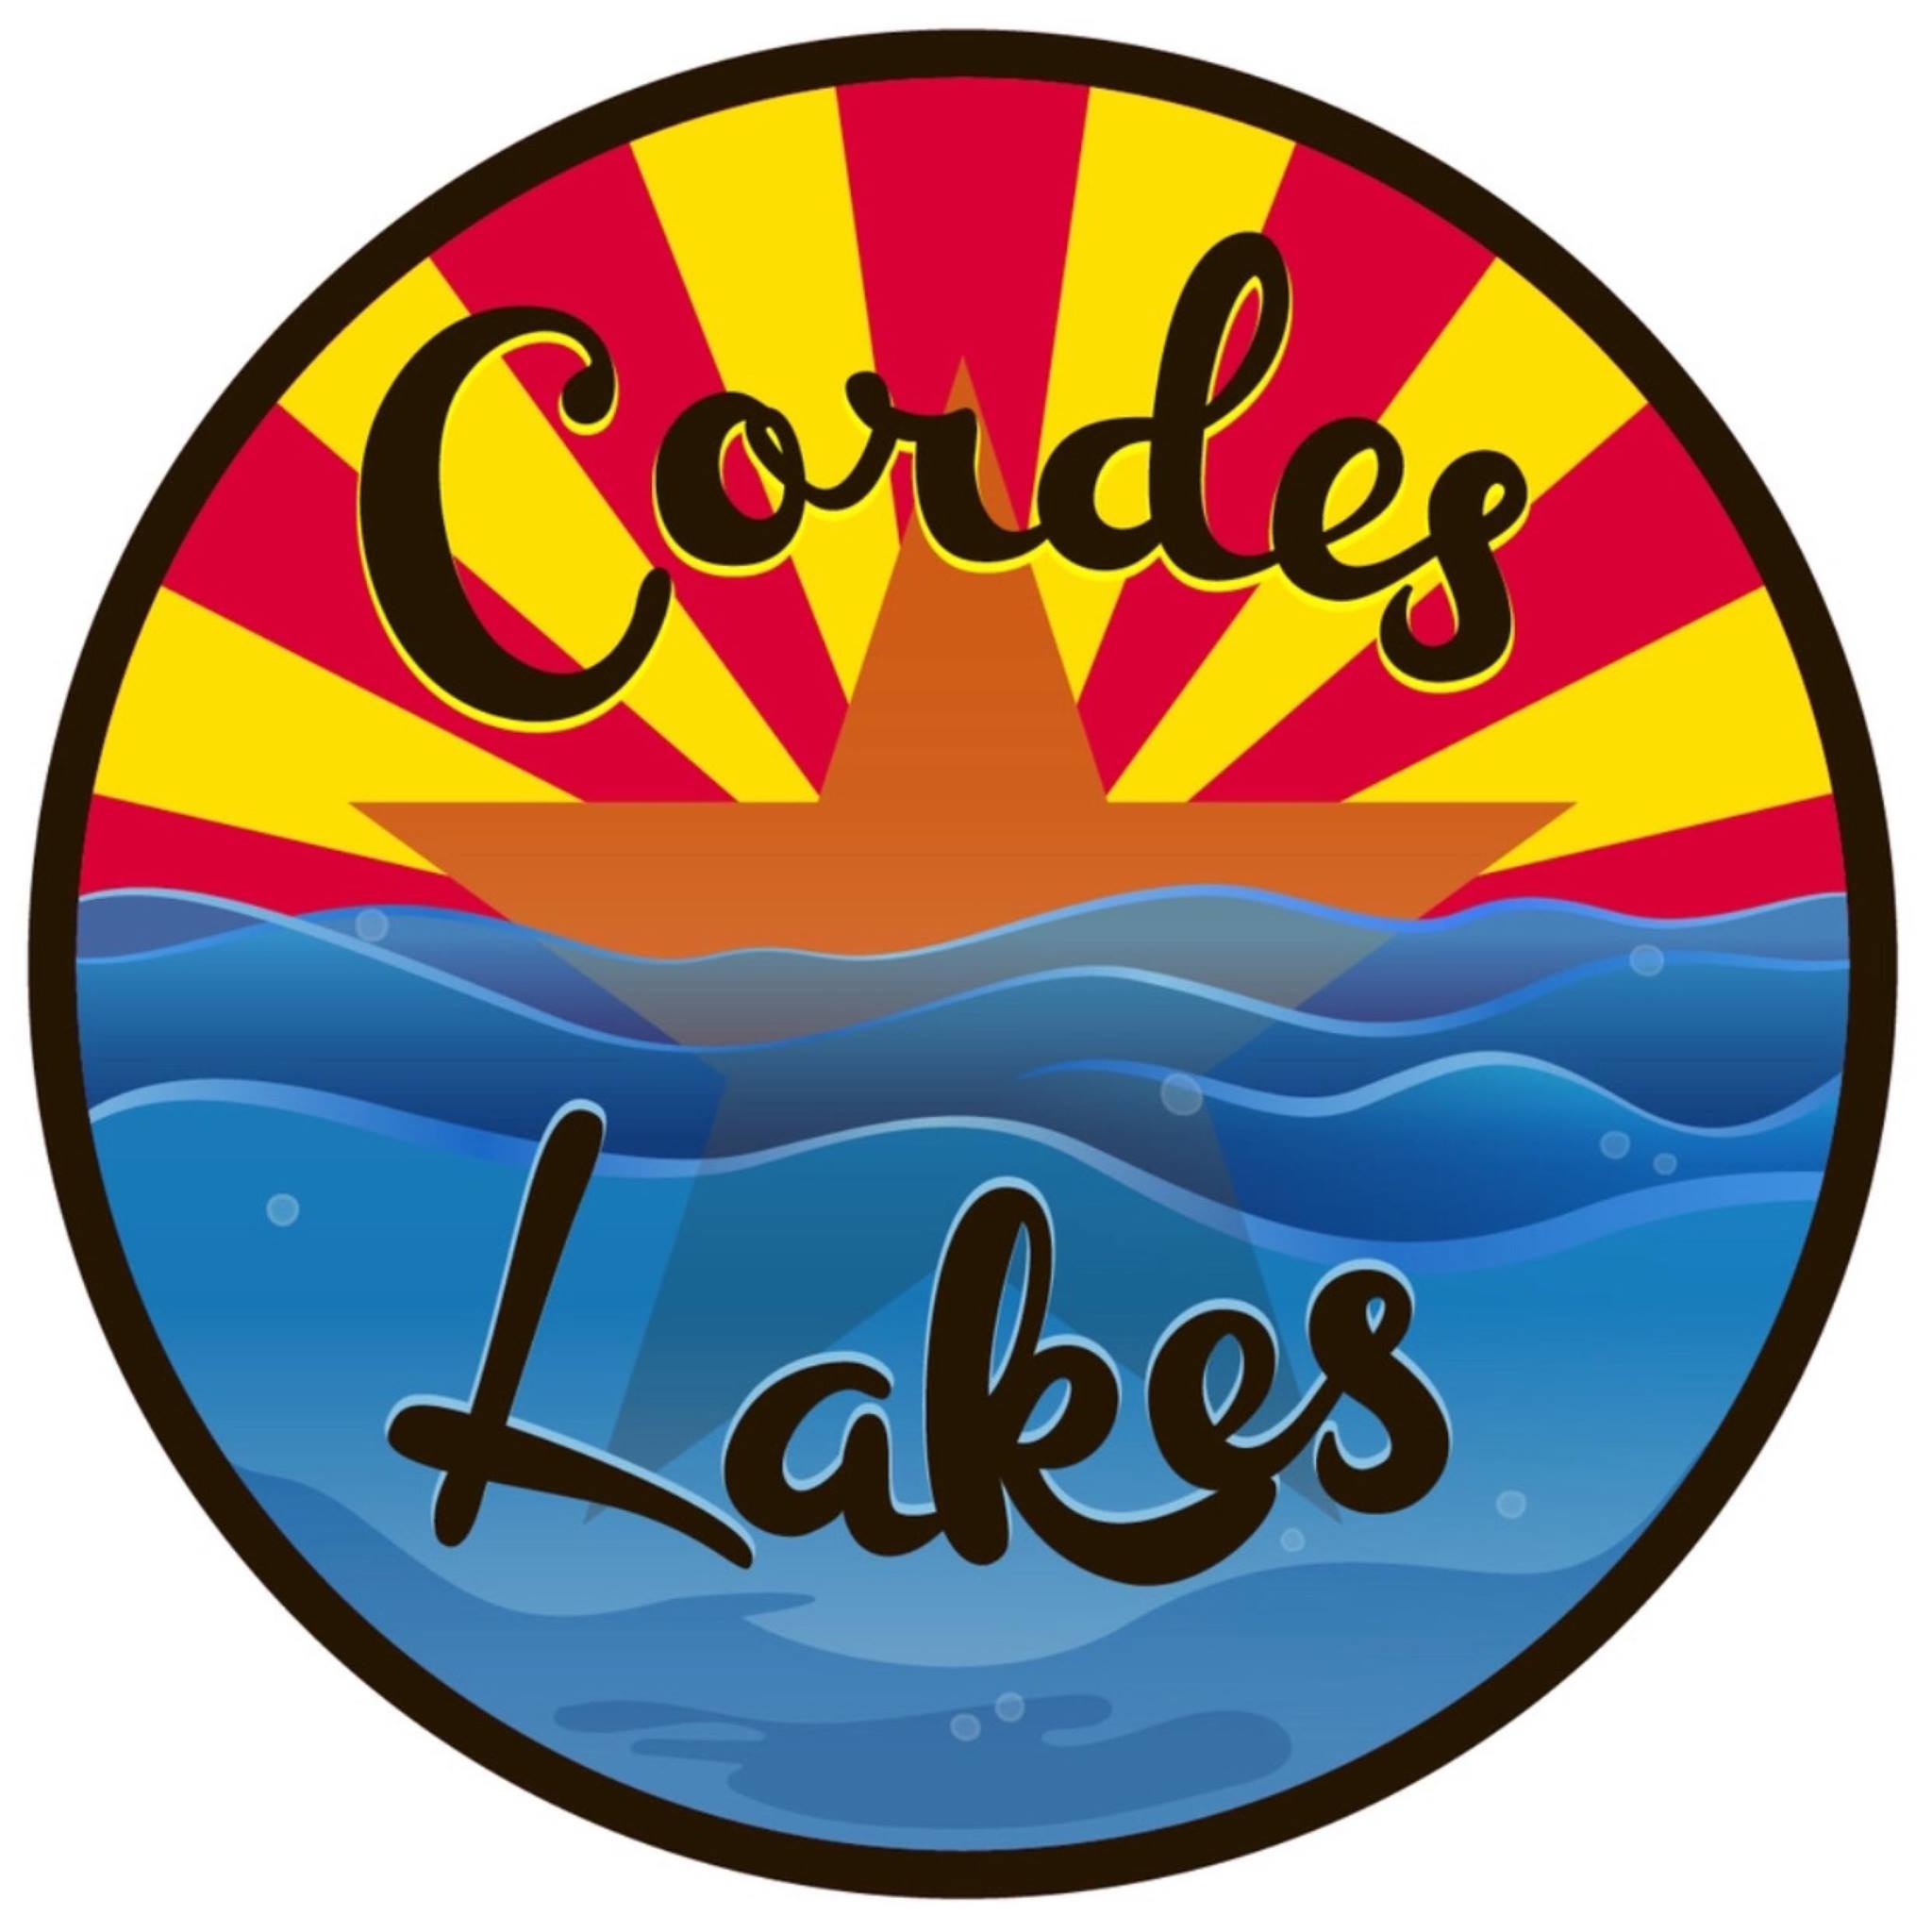 Cordes Lakes Community Center